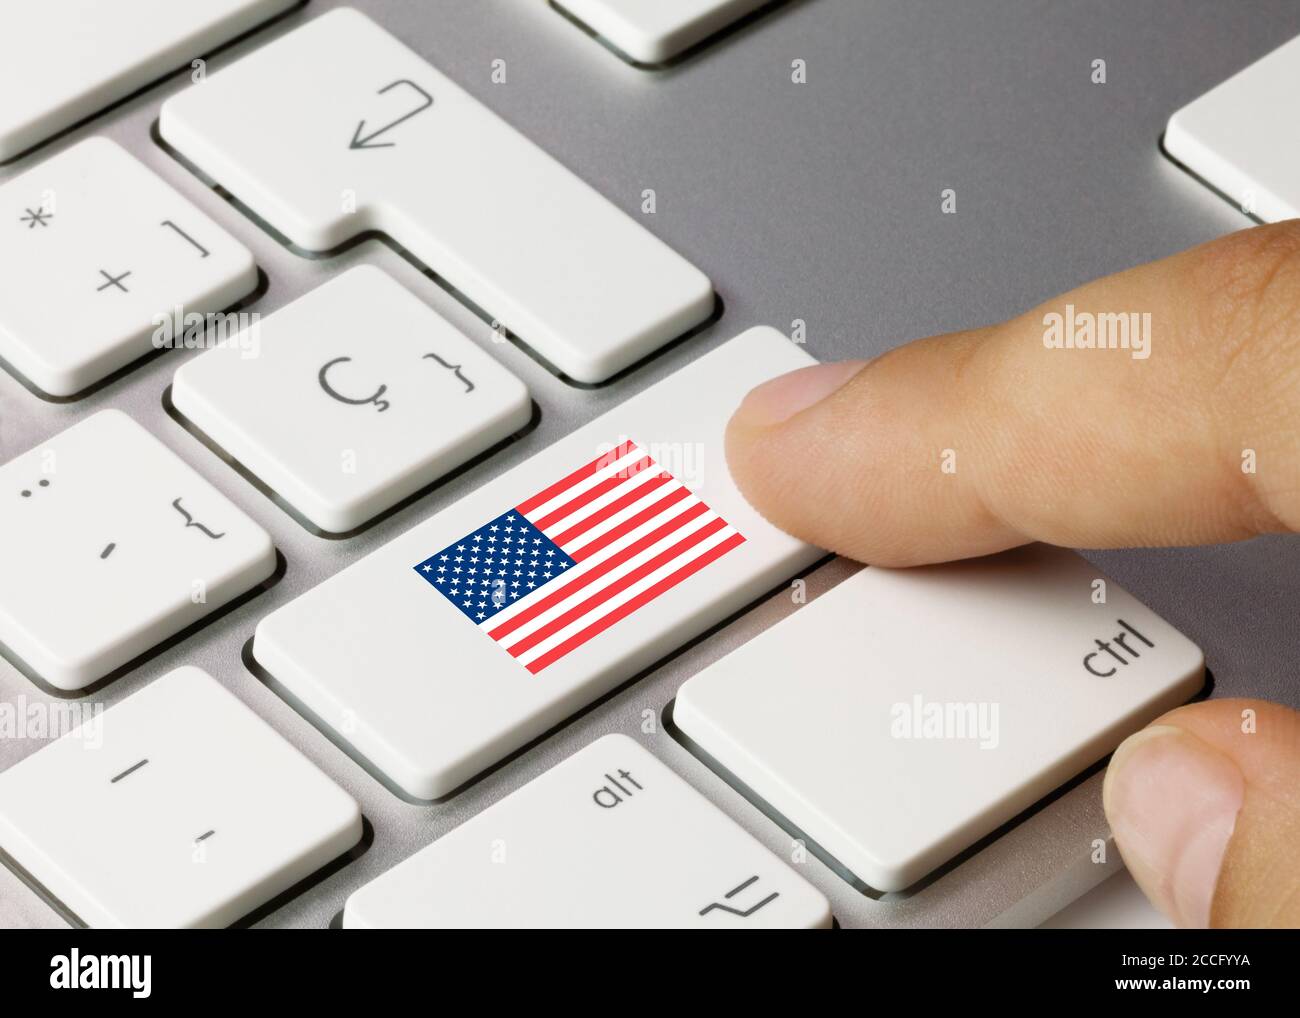 EEUU Written on White Key of Metallic Keyboard. Finger pressing key. Stock Photo